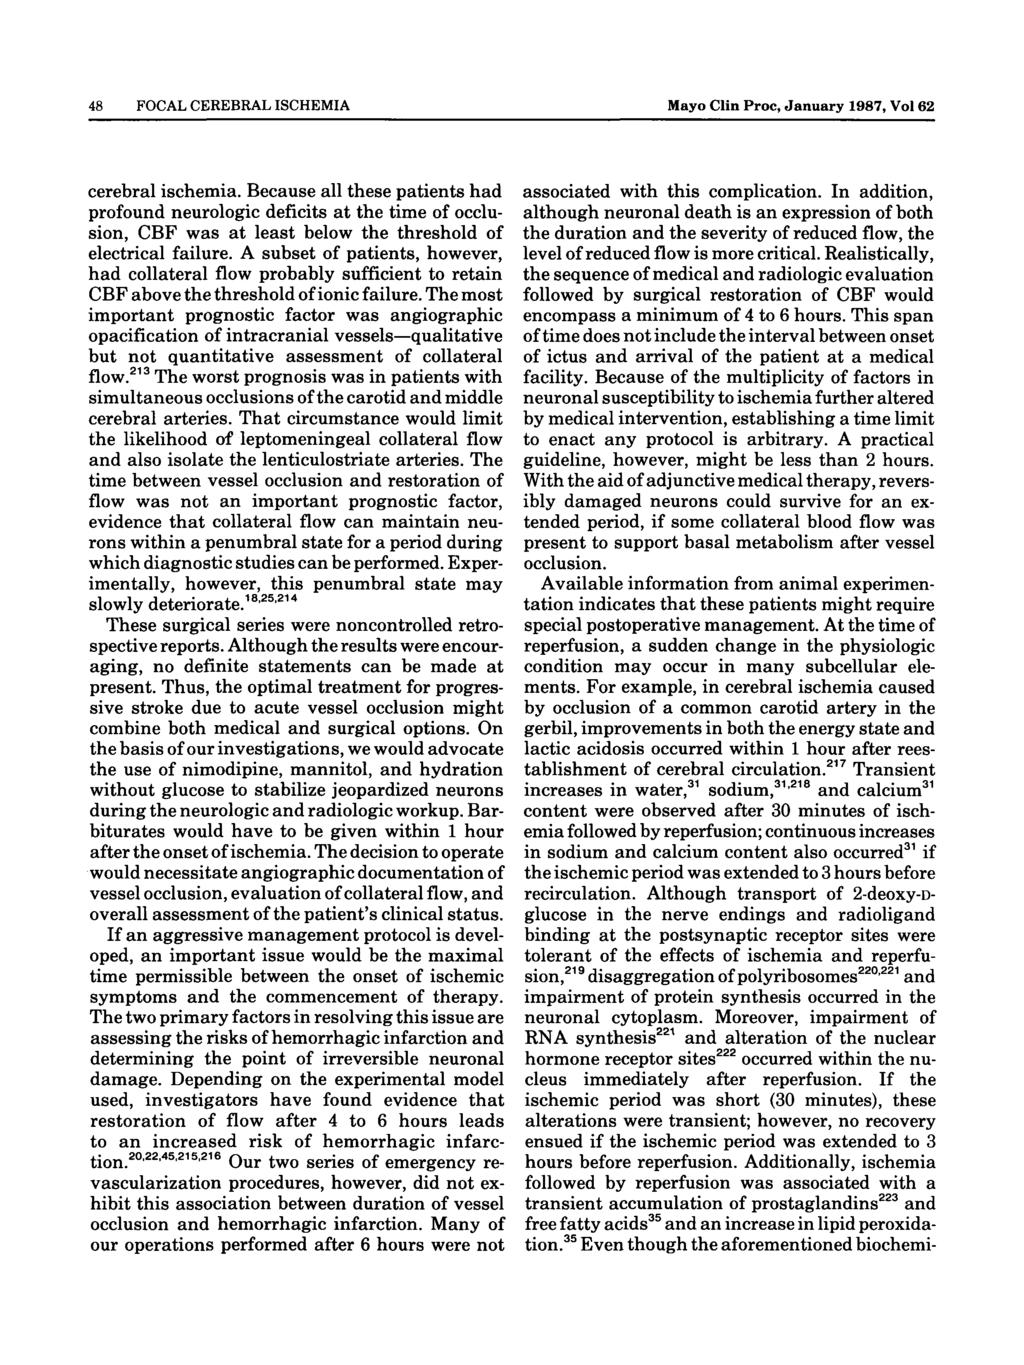 48 FOCAL CEREBRAL ISCHEMIA Mayo Clin Proc, January 1987, Vol 62 cerebral ischemia.